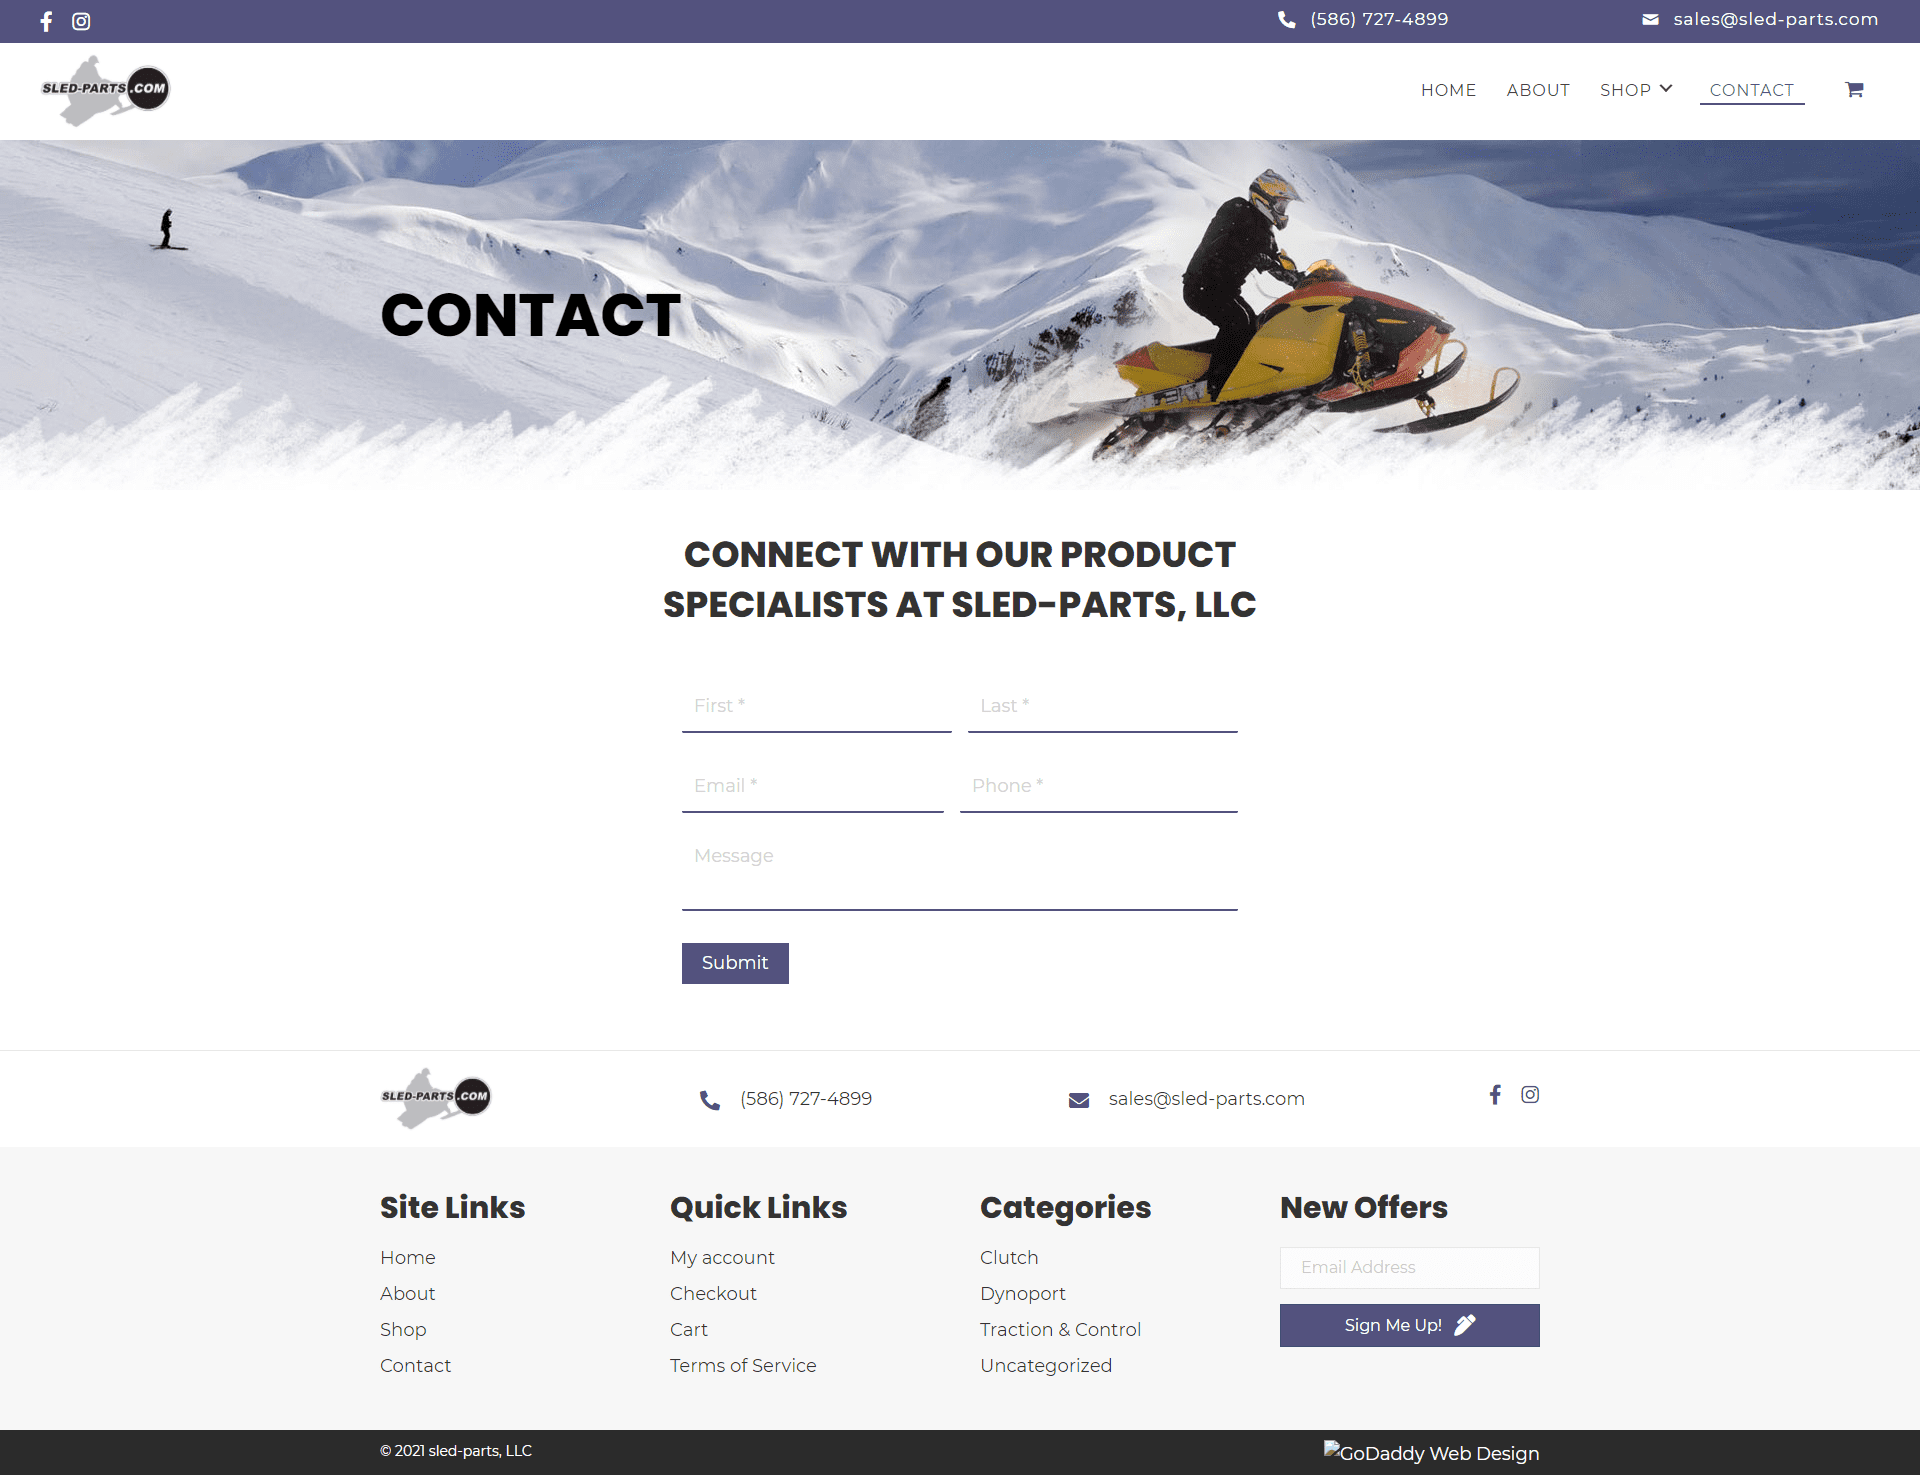 sled-parts, LLC Contact